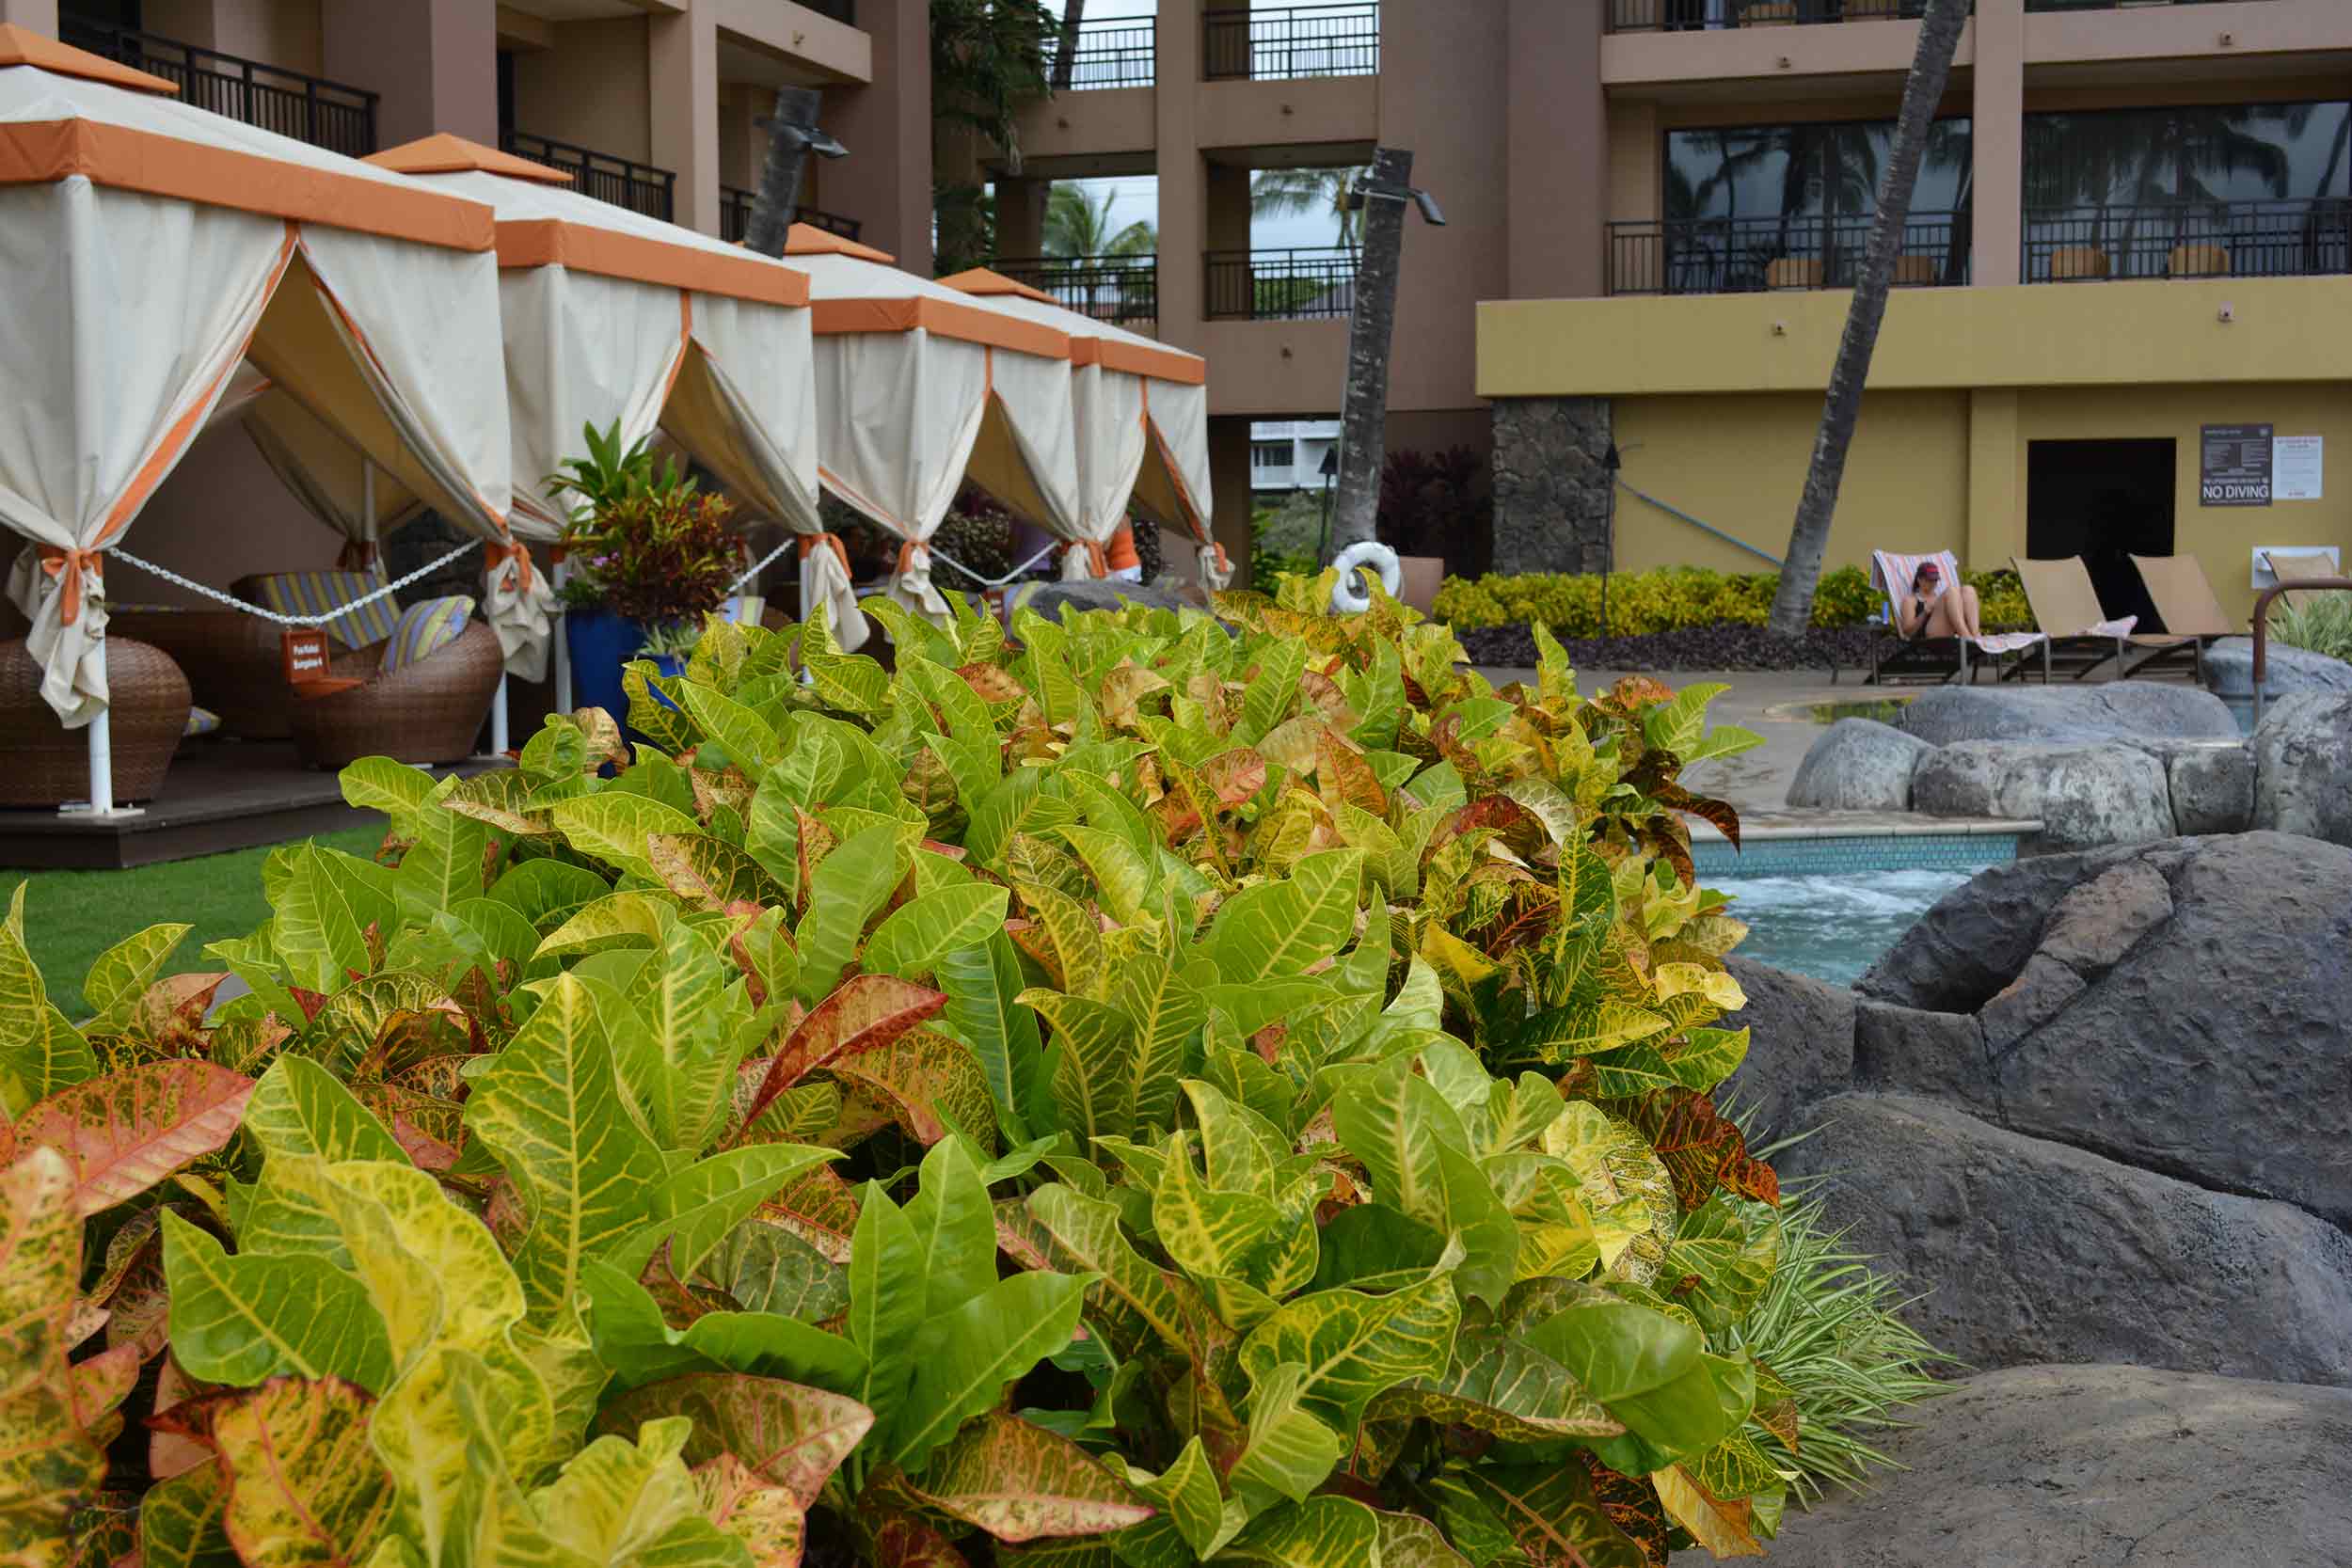 Landscaping for the Sheraton Kauai Resort pool in Koloa Hi